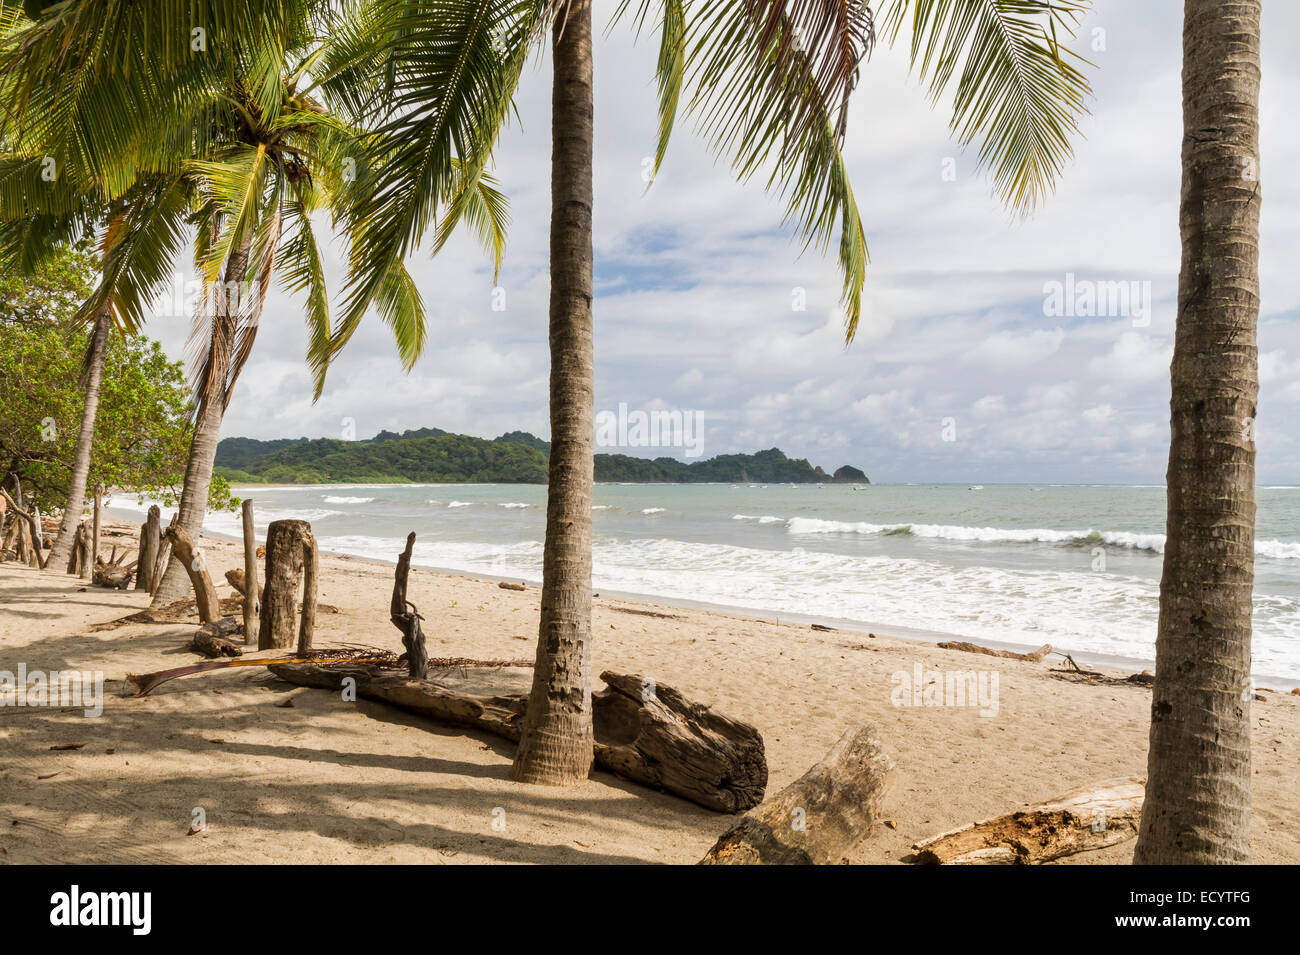 Palm trees shade the beach at quiet Playa Garza in Nosara, Costa Rica Stock Photo